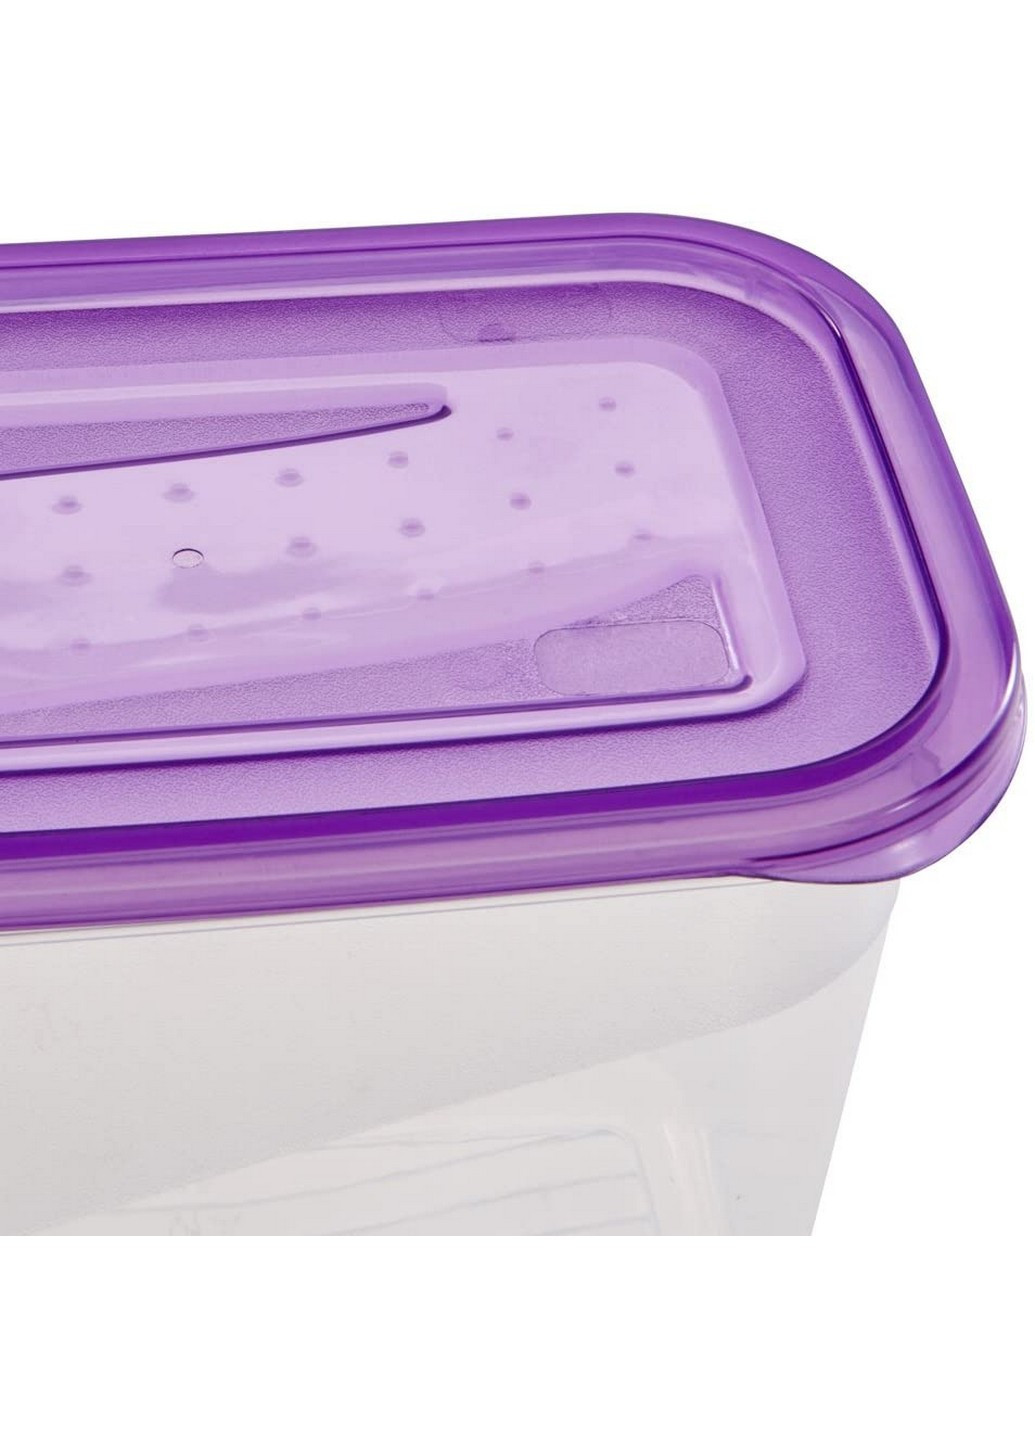 Комплект емкостей для СВЧ Fredo Fresh 3х1.0 л с фиолетовыми крышками (KEE-674) Keeeper (216708584)